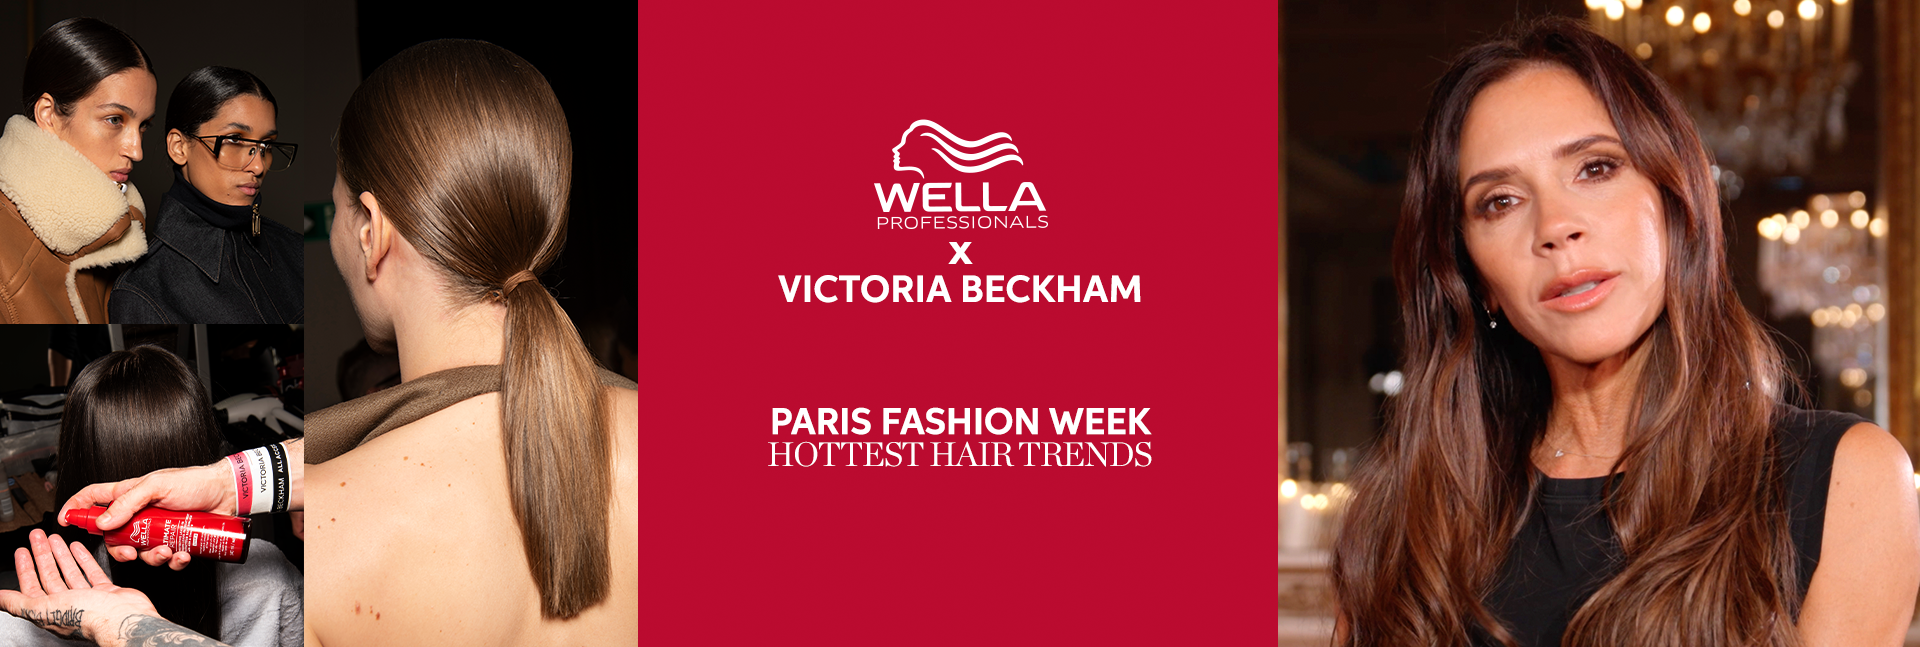 Wella Professionals and Victoria Beckham at Paris Fashion Week